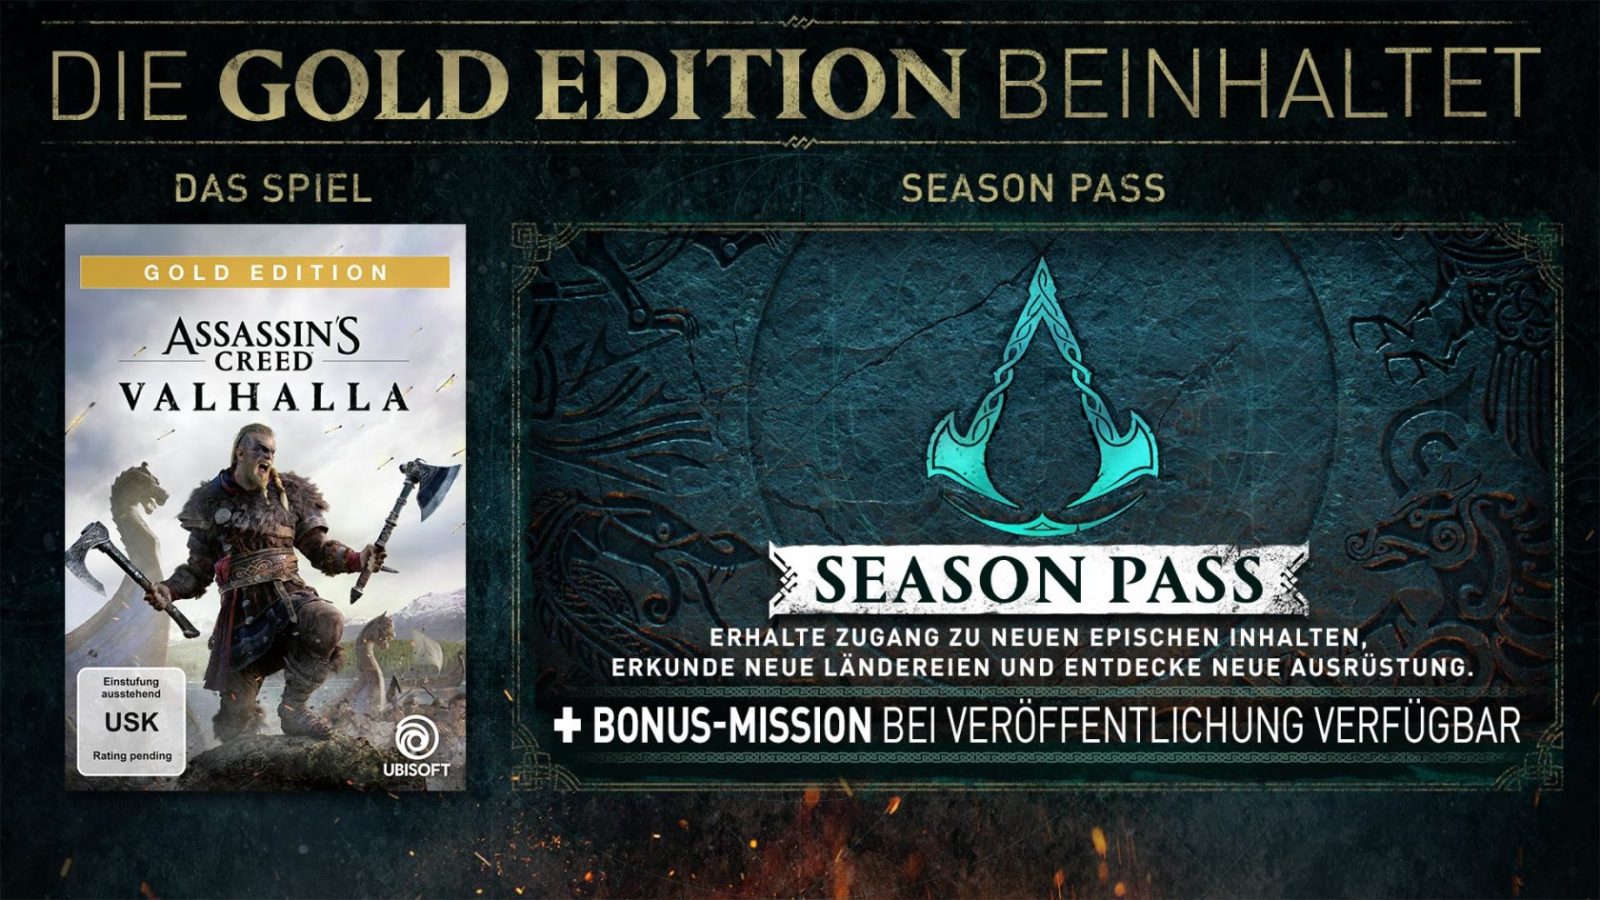 Assassins Creed Valhalla Gold Edition